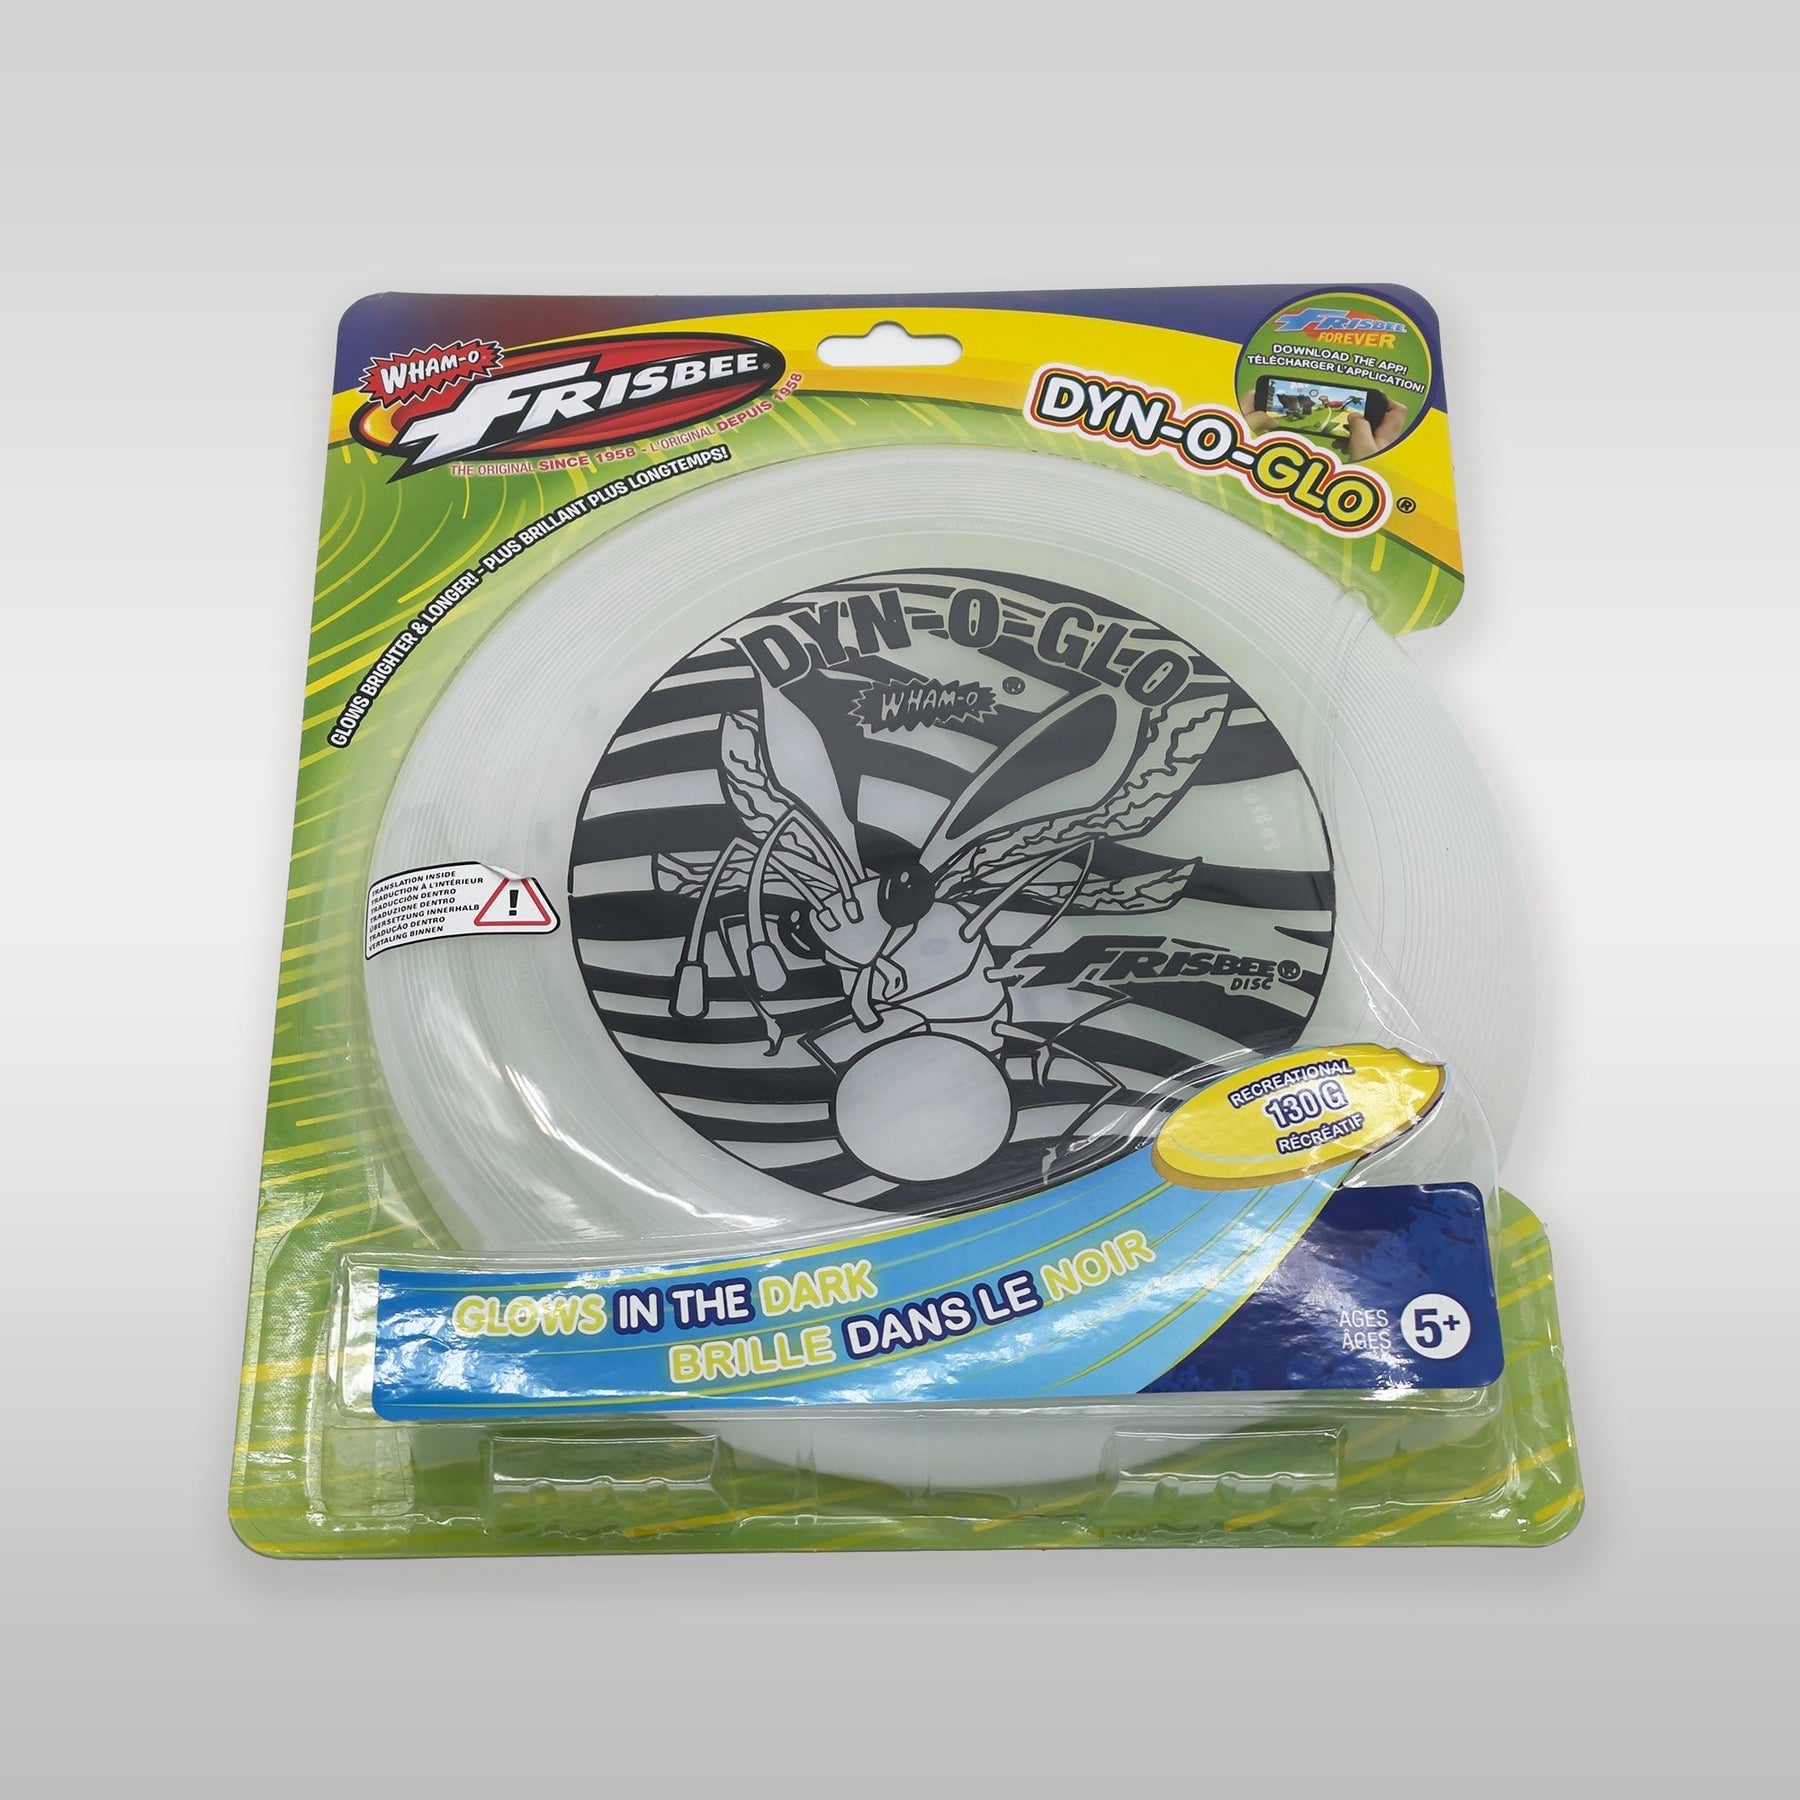 Frisbee® Dyn-O-Glow 130g - Insect Frisbee Wham-O 